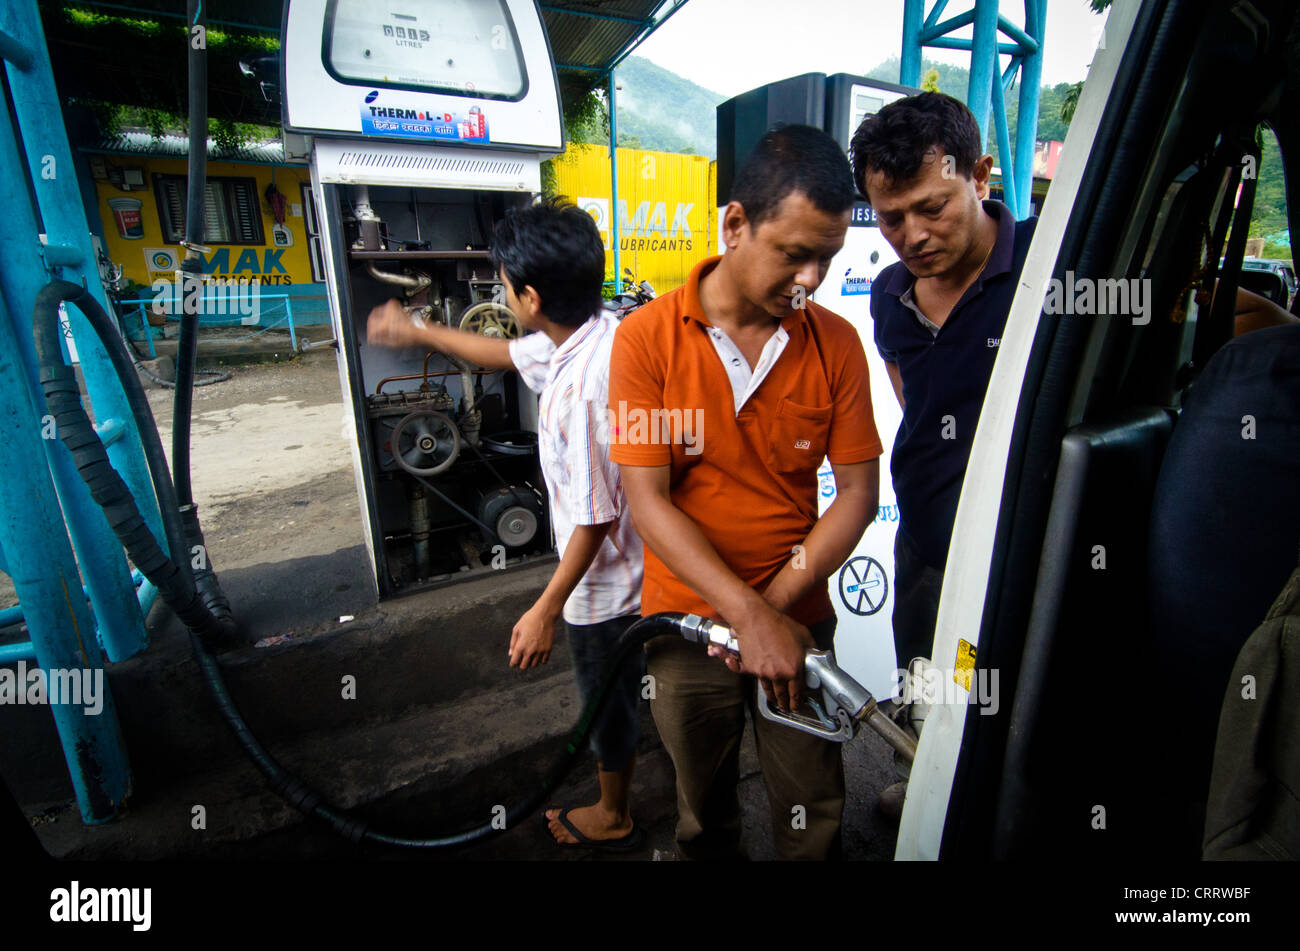 A pumps gasoline on a hand crank benzine pump in Nepal Stock Photo